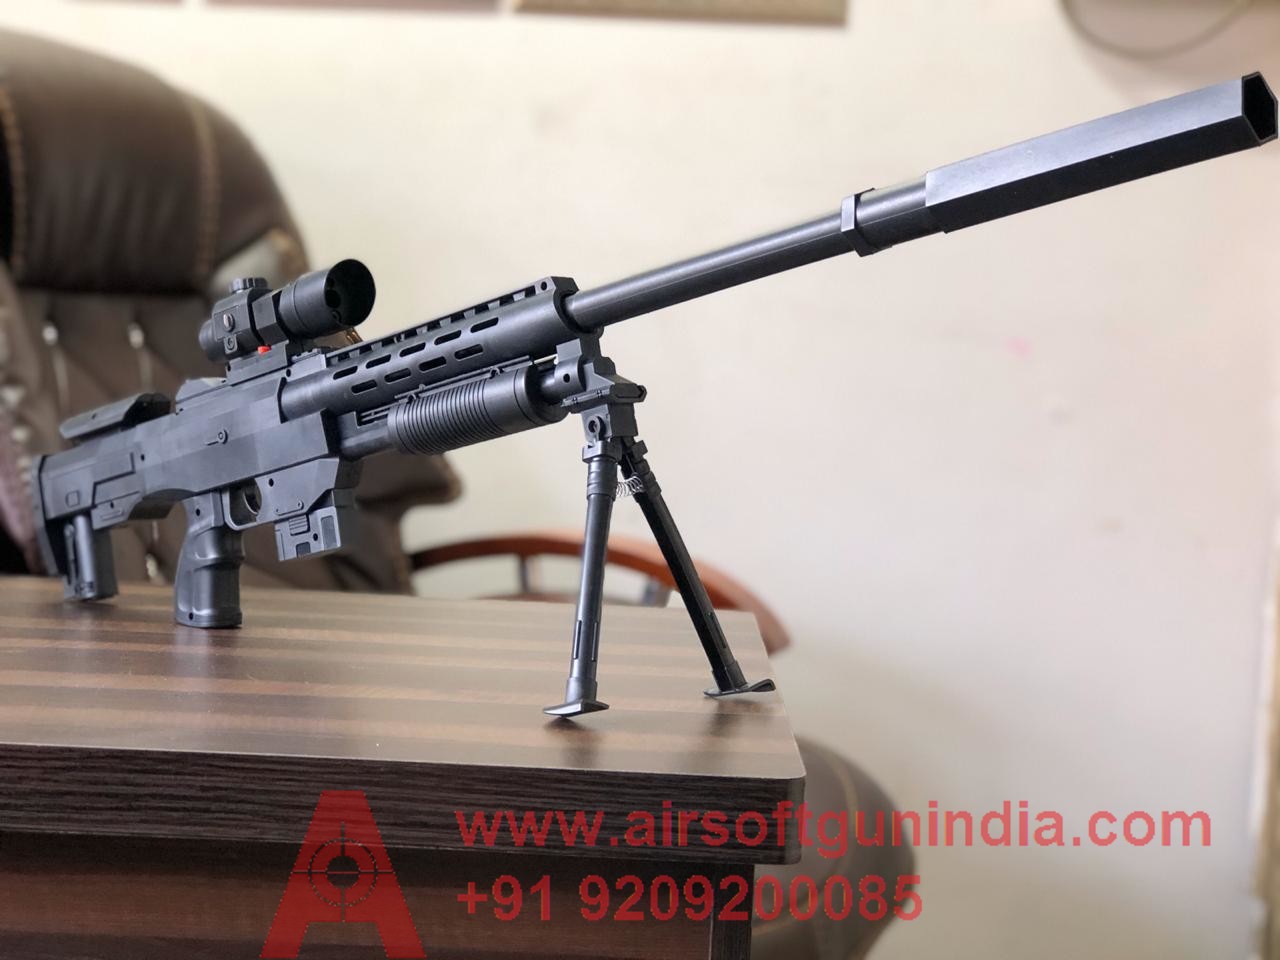 TS12 Airsoft Sniper Rifle By Airsoft Gun India